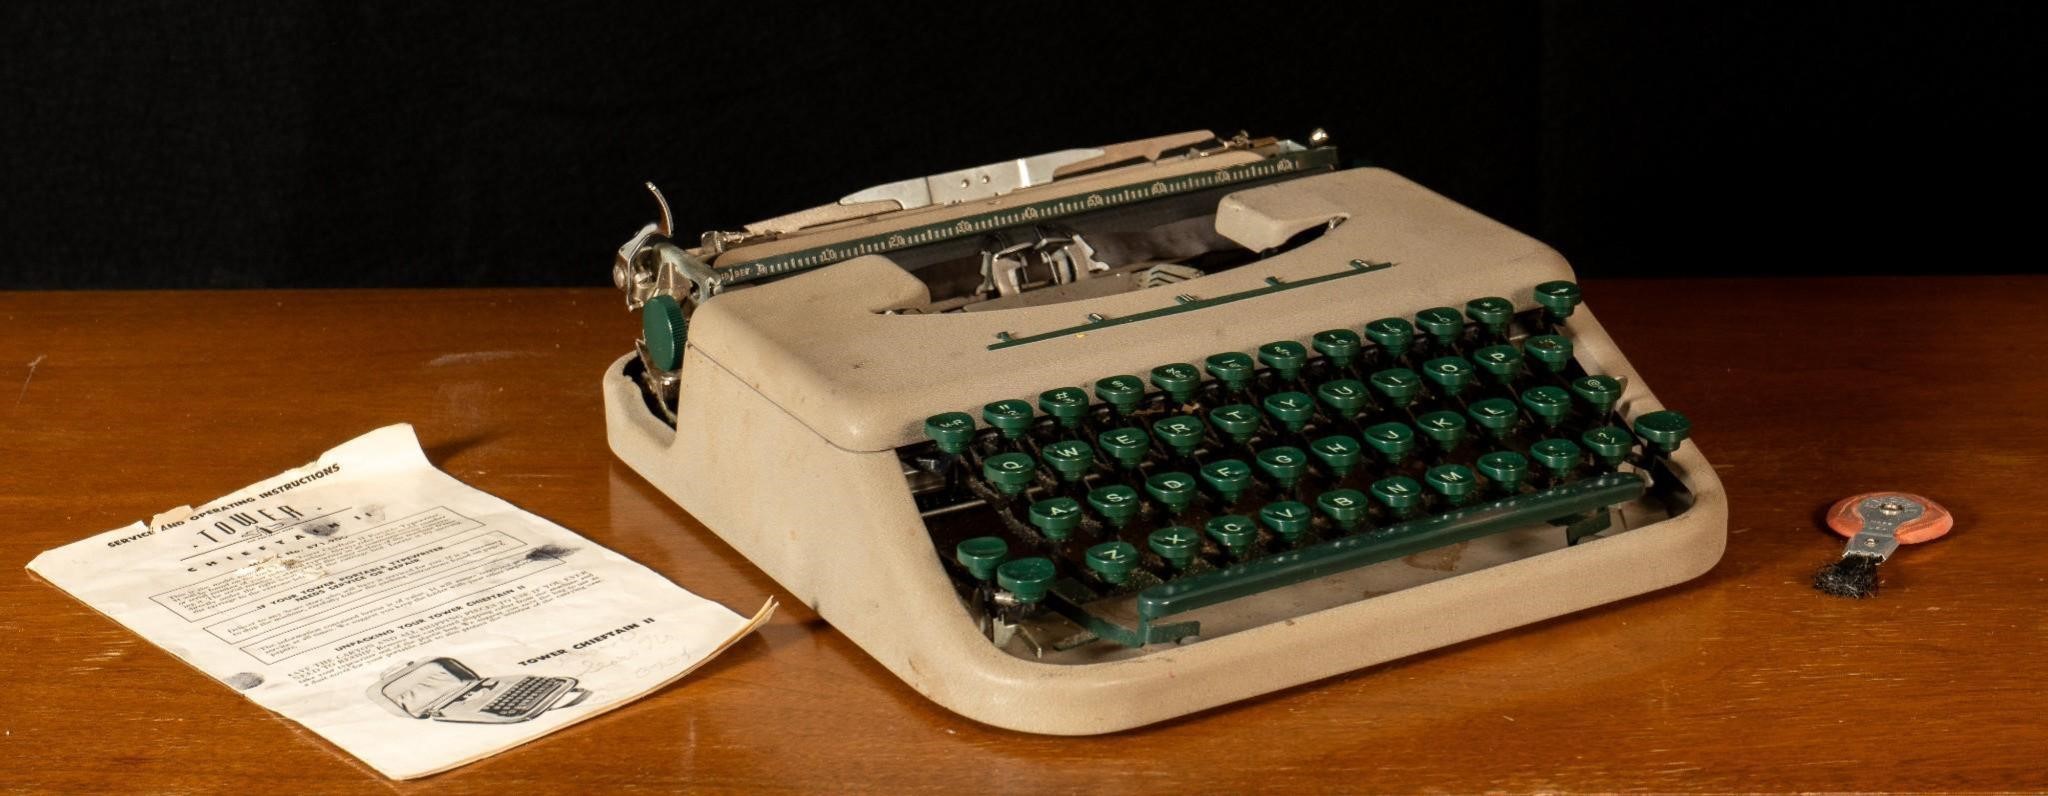 1958 Tower Chieftain II Portable Typewriter